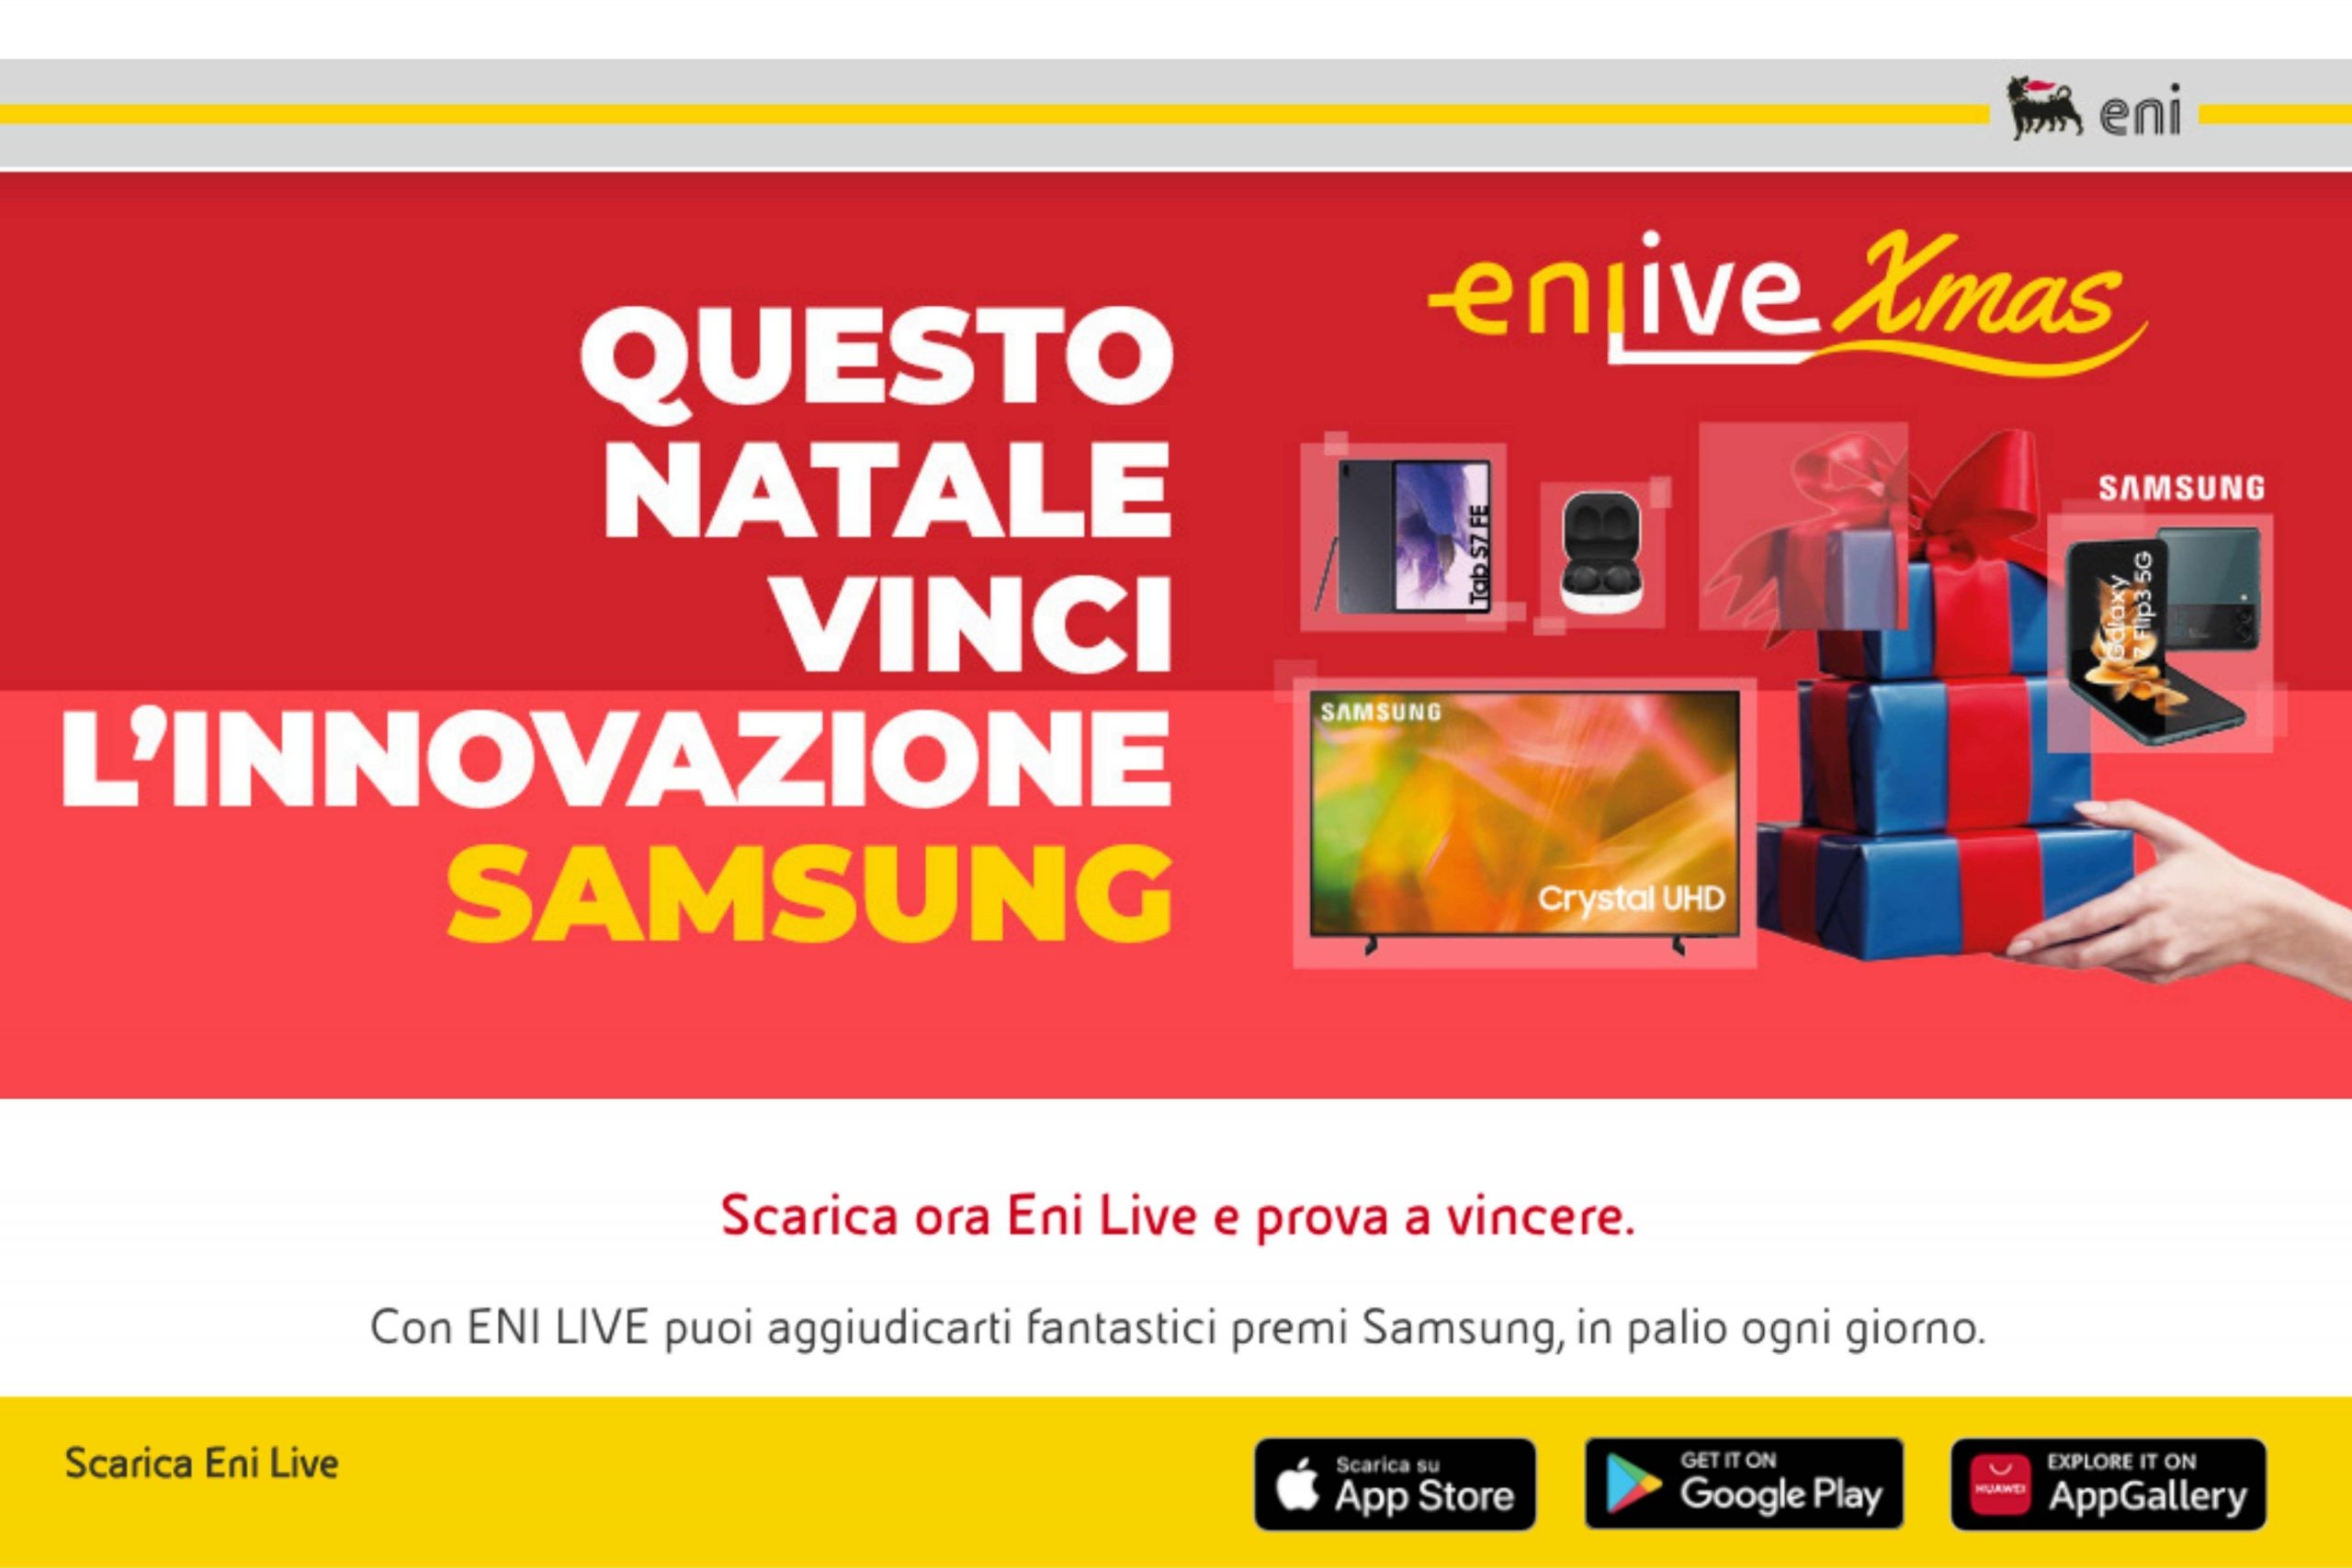 Concorso gratuito “Eni Live Xmas”: come vincere gratis cuffie, smartphone, tv o tablet Samsung